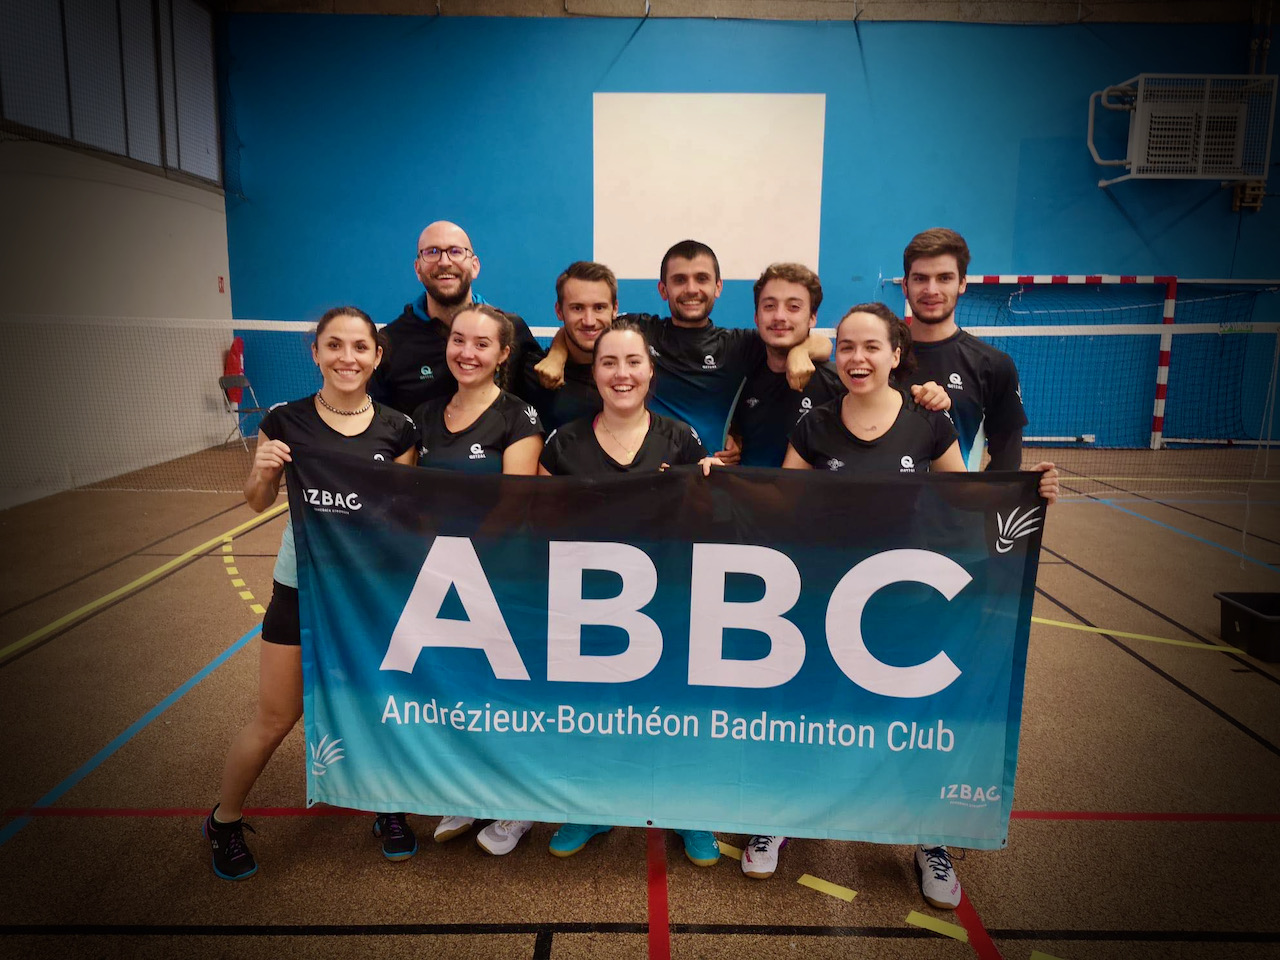 (c) Ab-badminton.fr